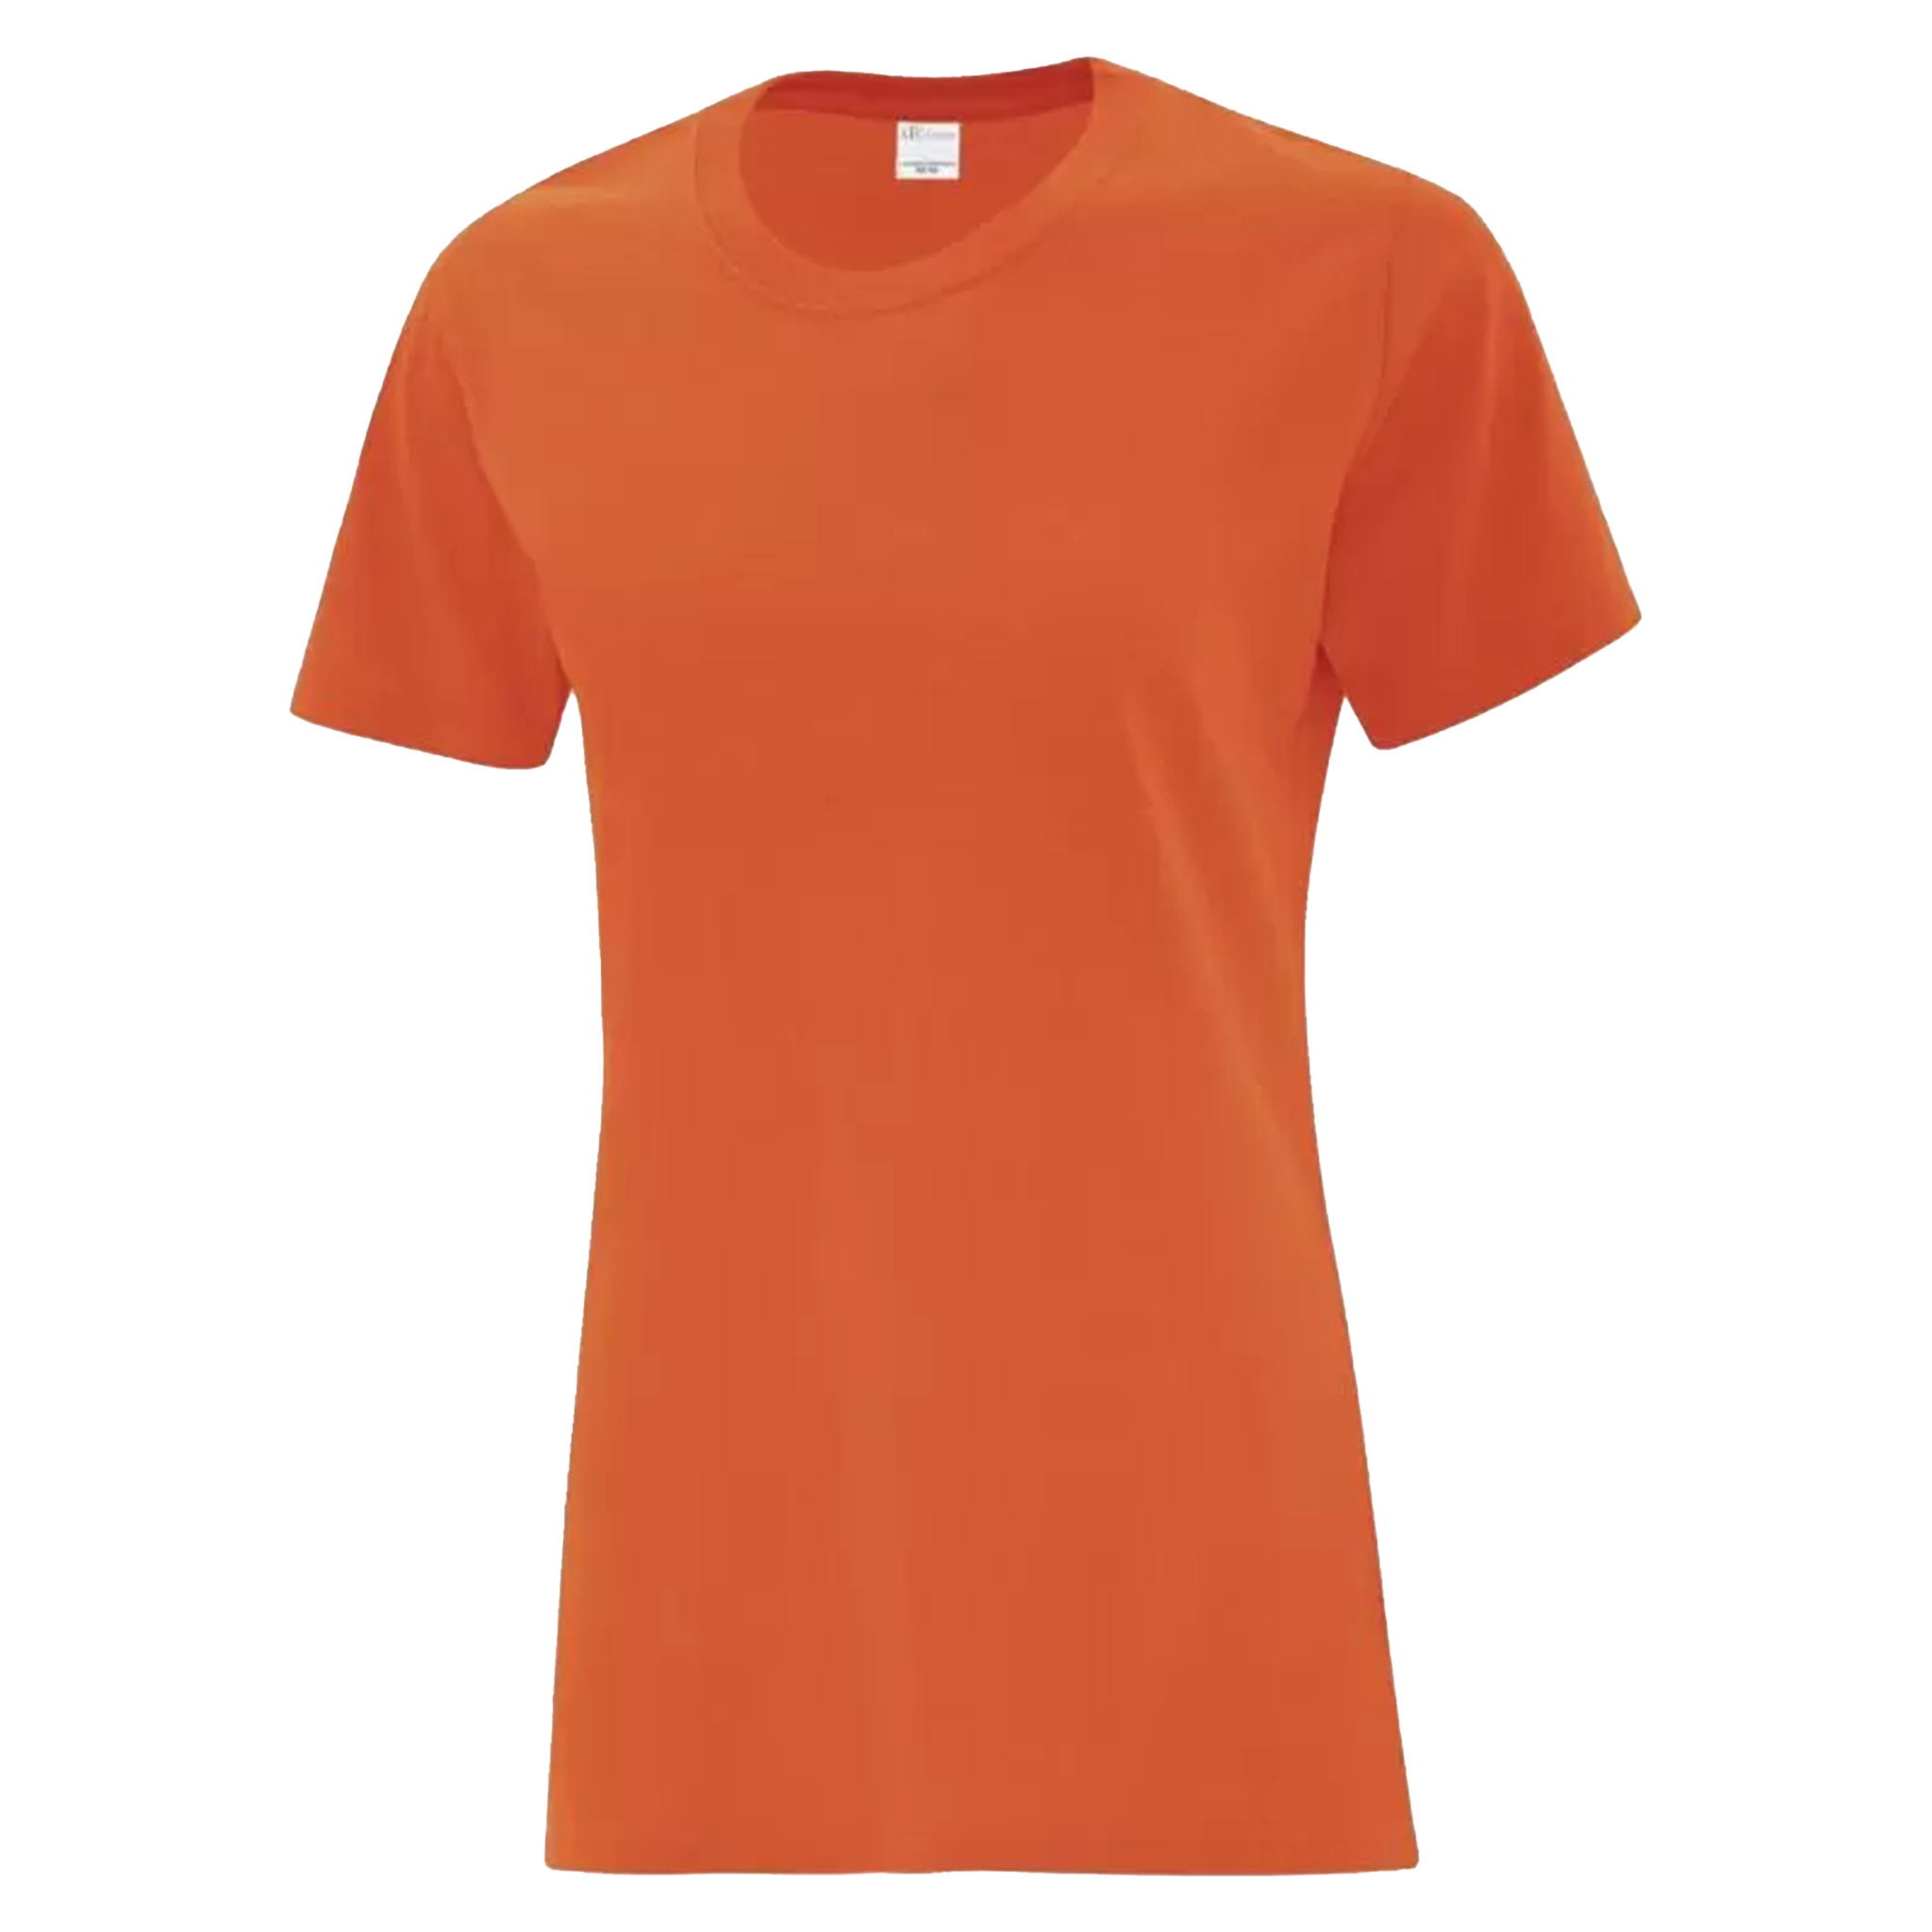 ATC Everyday Cotton T-Shirt - Women's Sizing XS-4XL - Orange